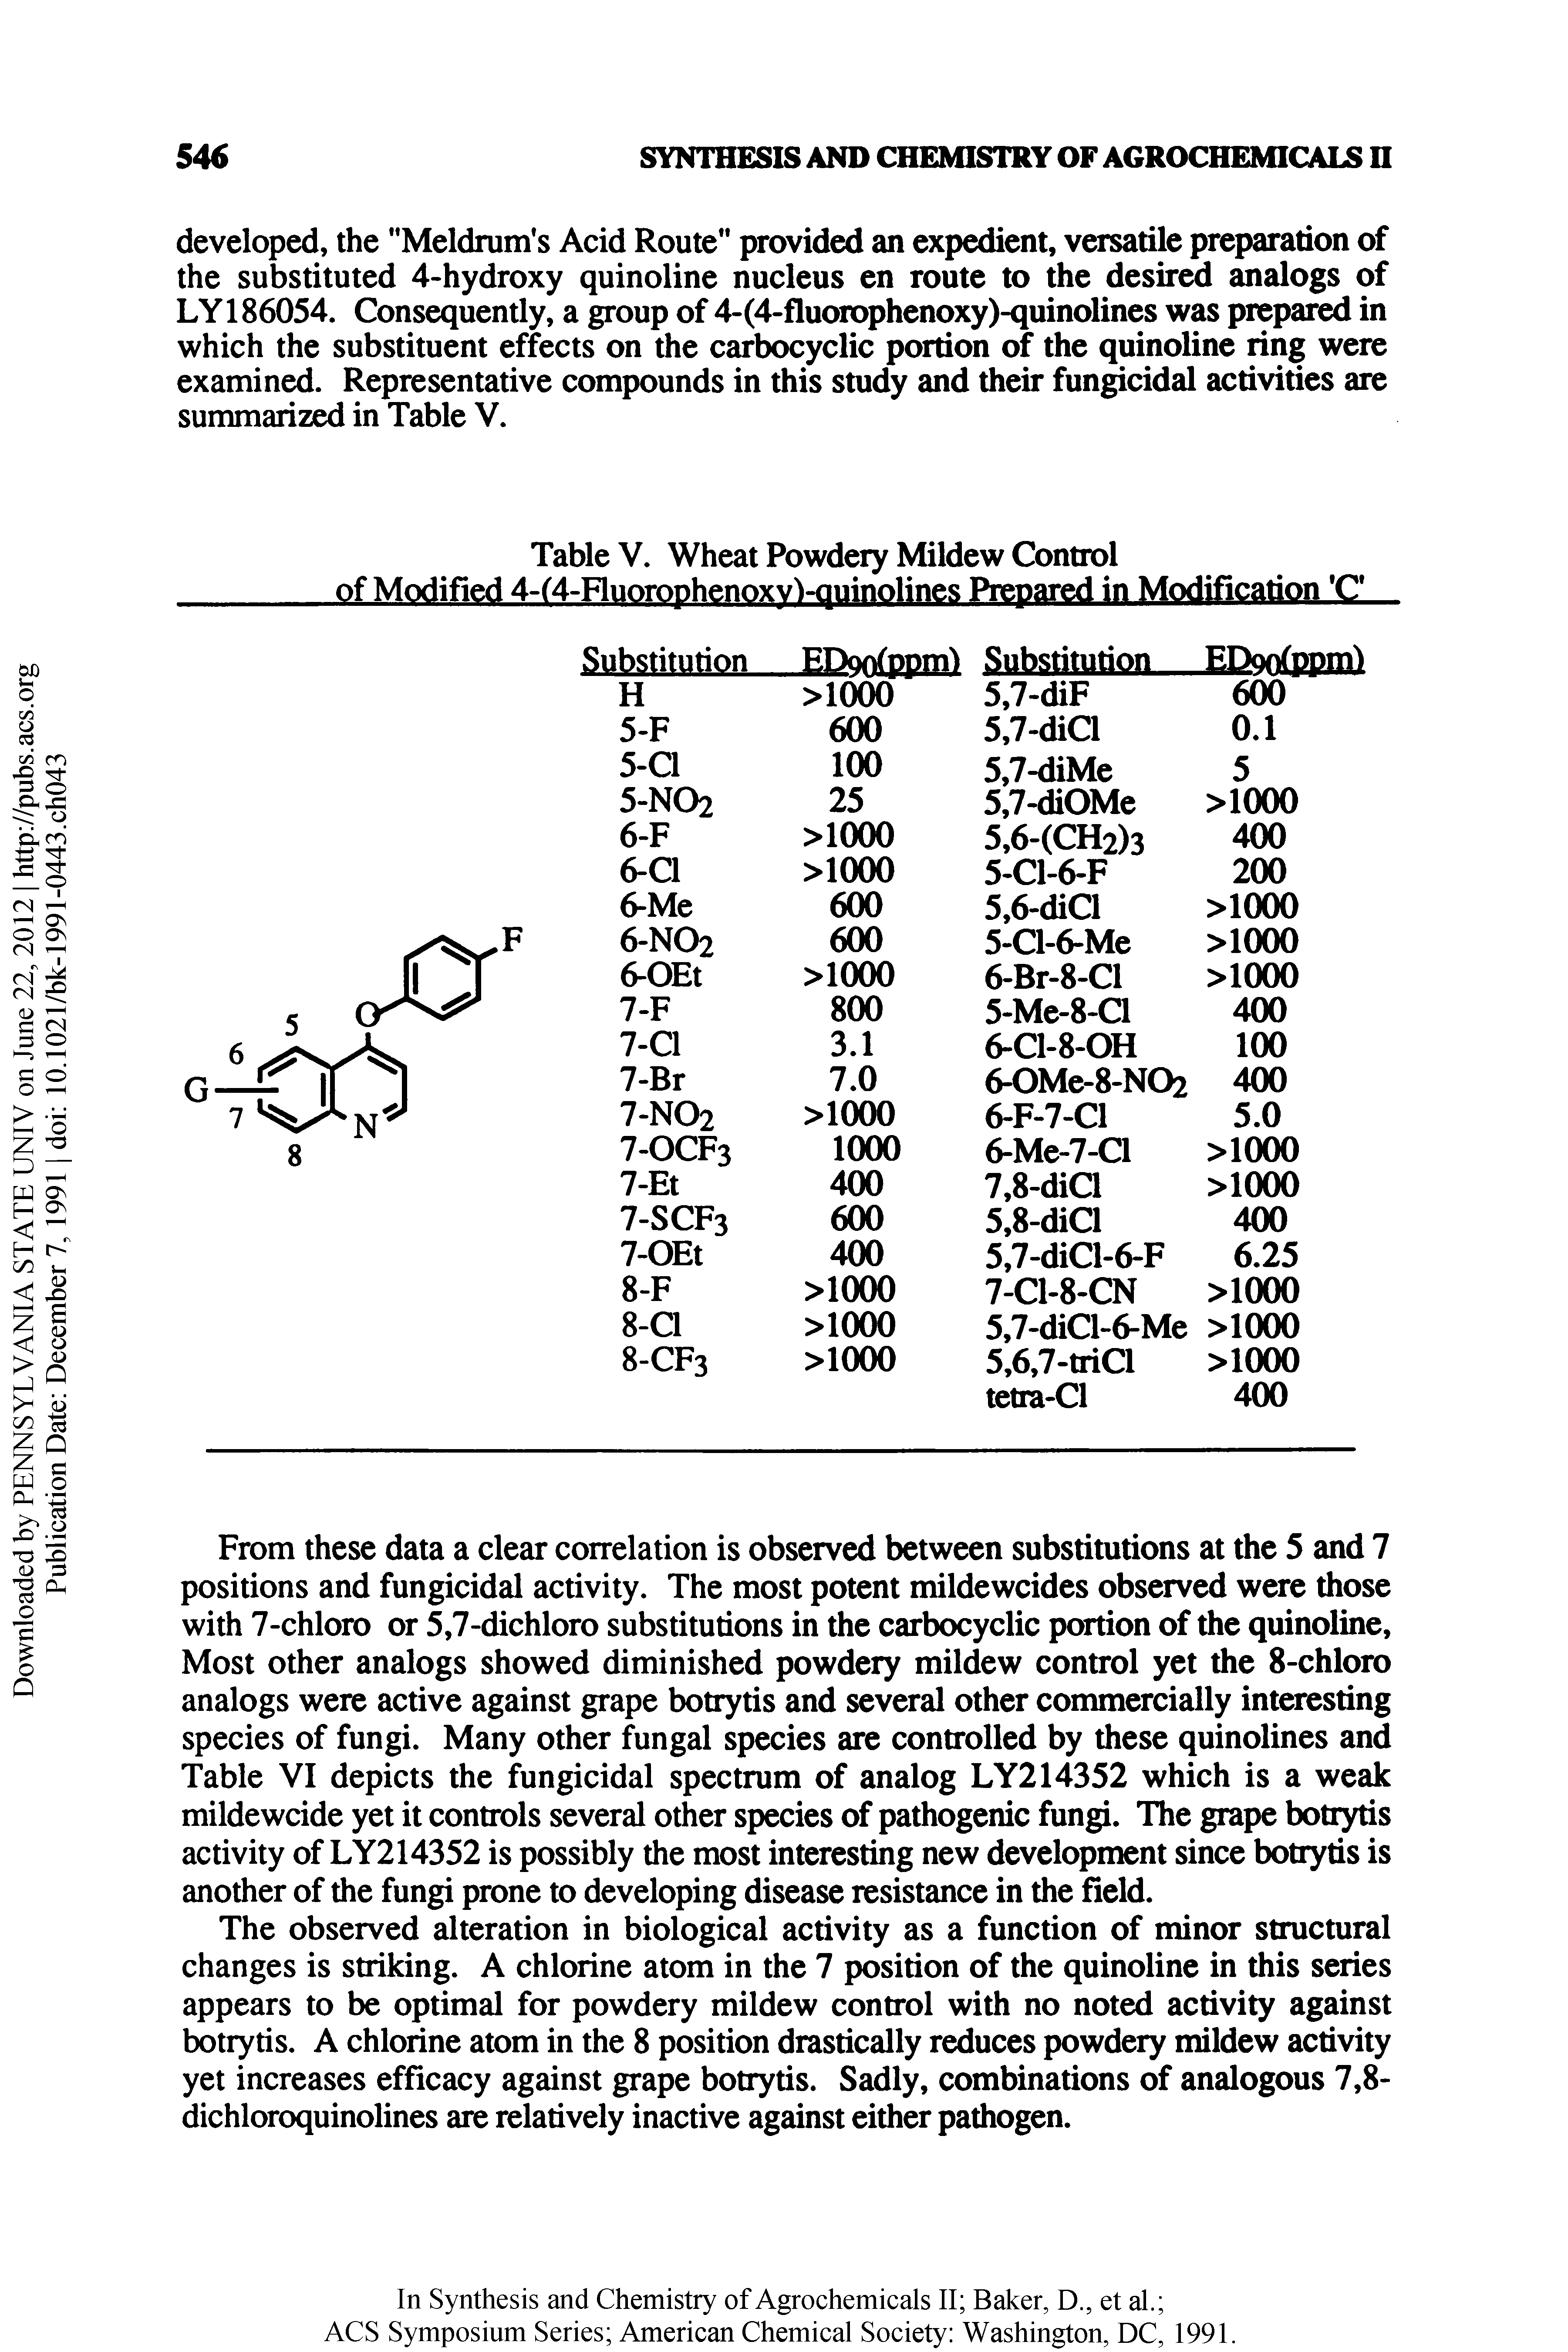 Table V. Wheat Powdery Mildew Control of Modified 4-(4-Fluorophenoxv -quinolines Prepared in Modification C...